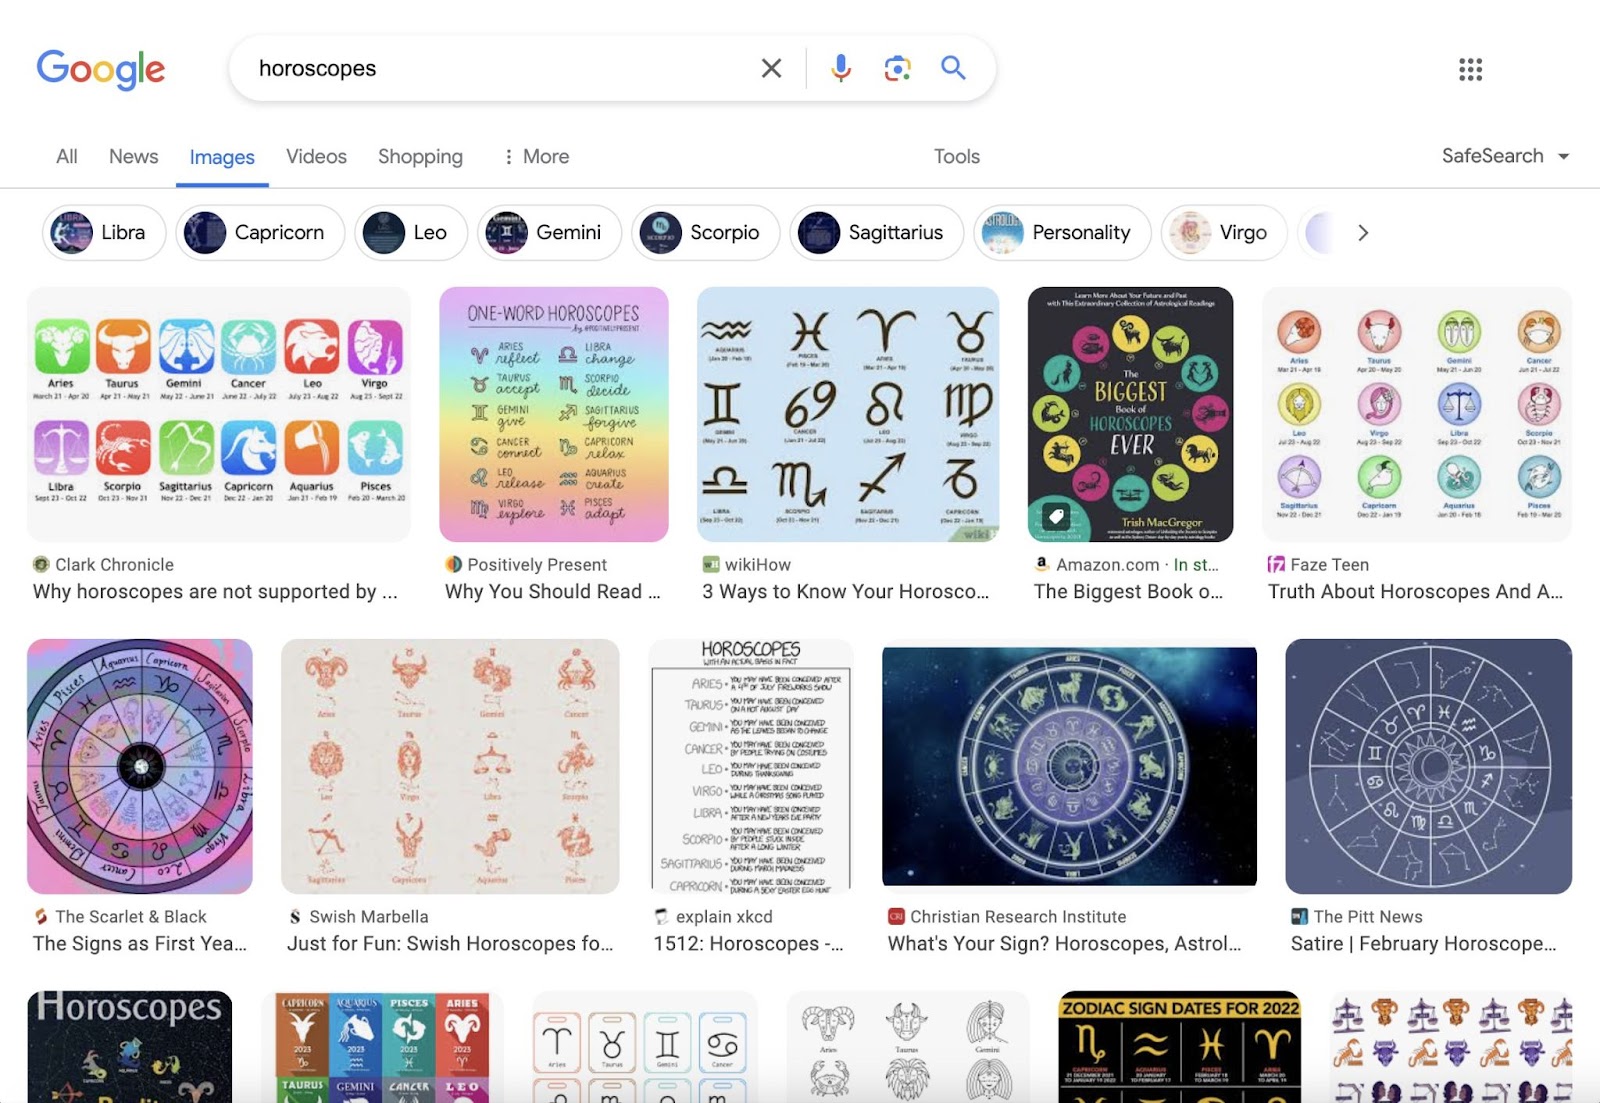 Google “Images” results for "horoscopes" on desktop